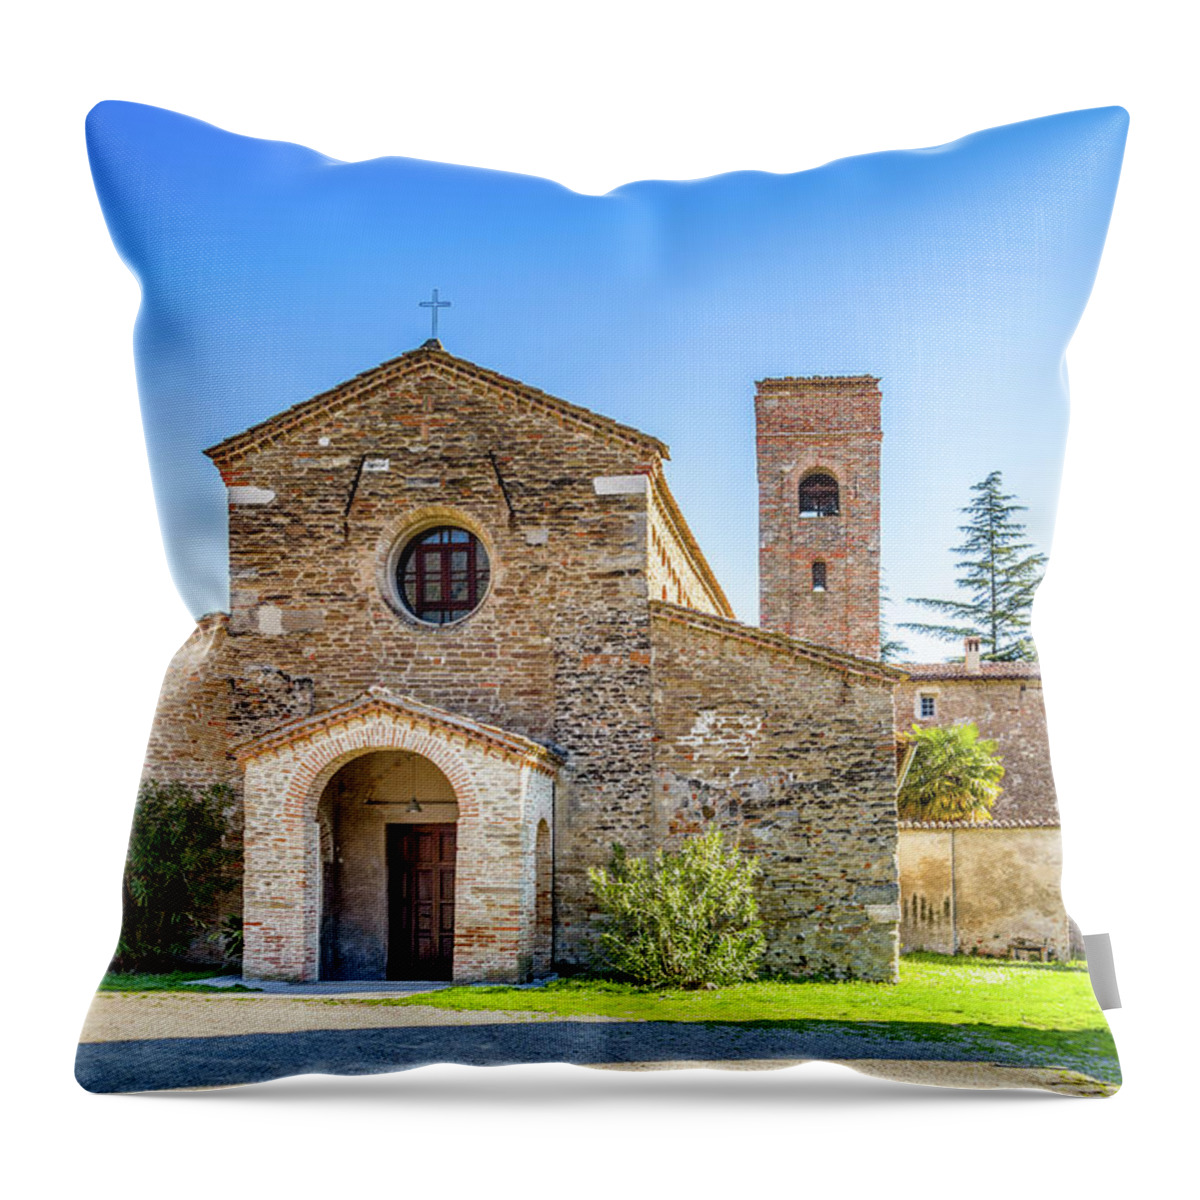 Italy Throw Pillow featuring the photograph Evocative religiosity of a Romanesque Church by Vivida Photo PC